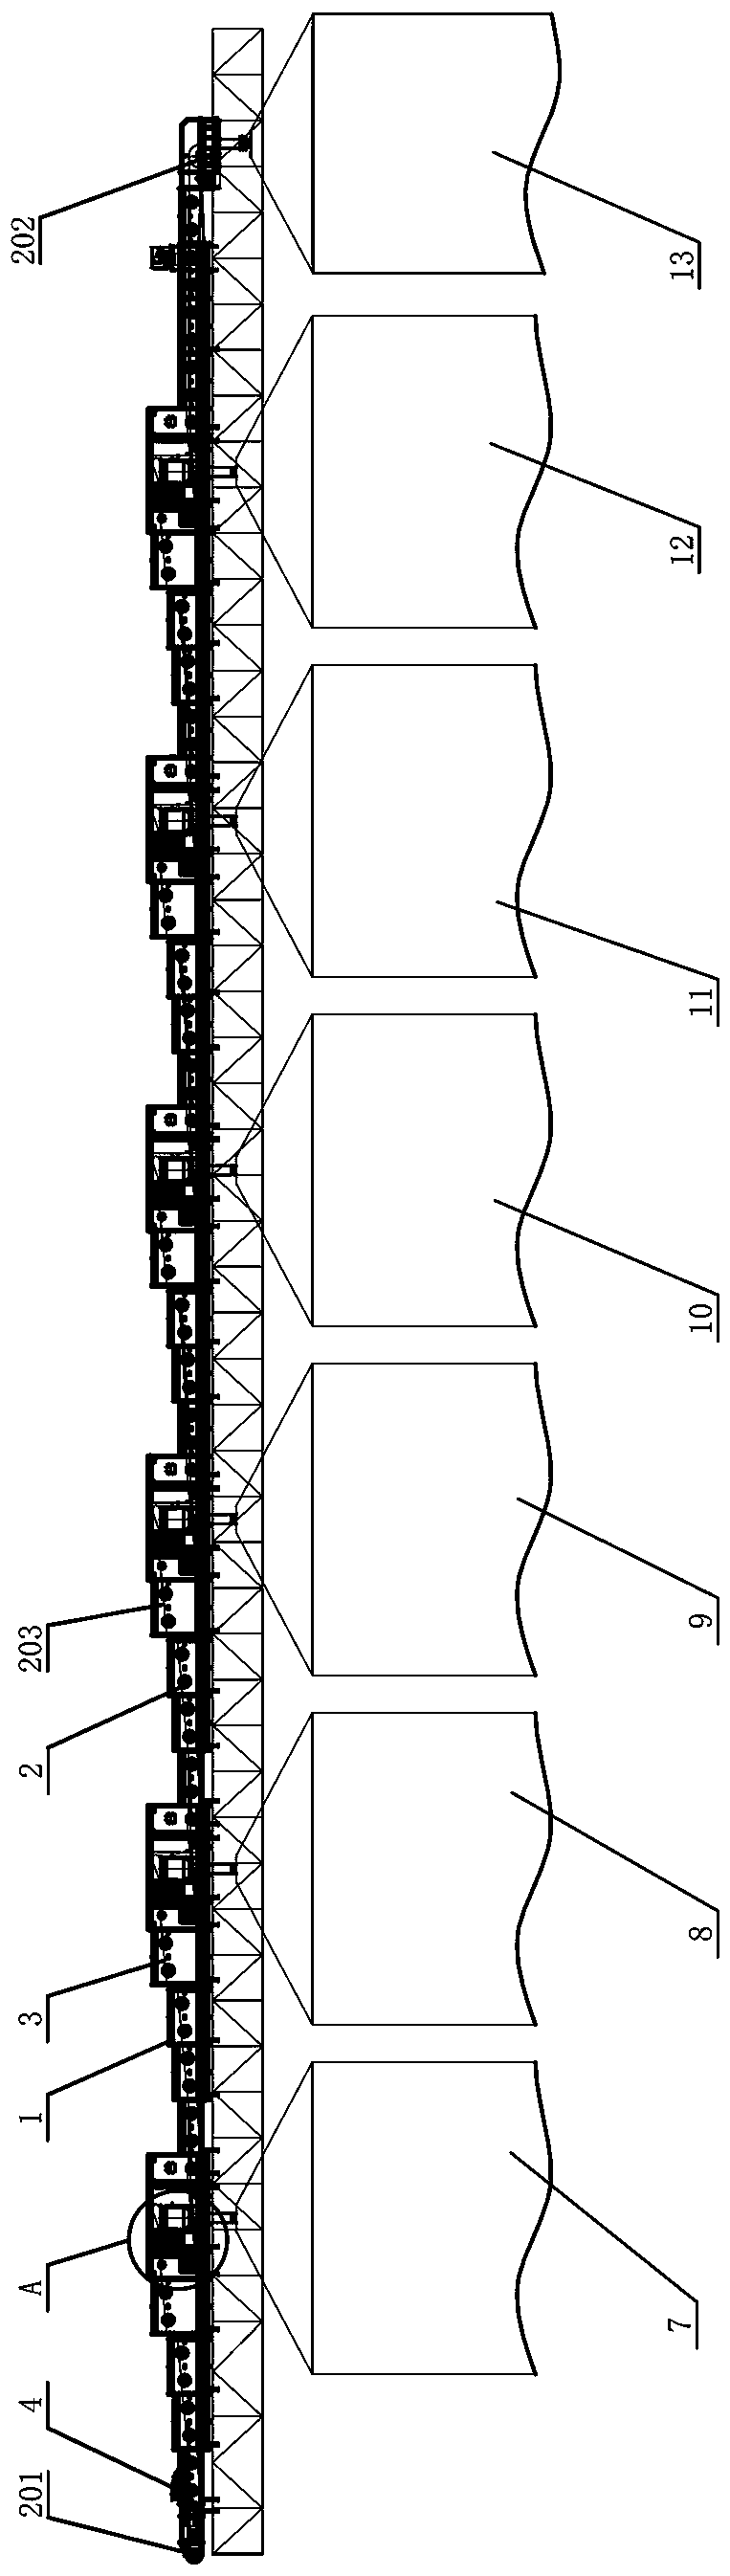 Multipoint-discharging belt conveyor system